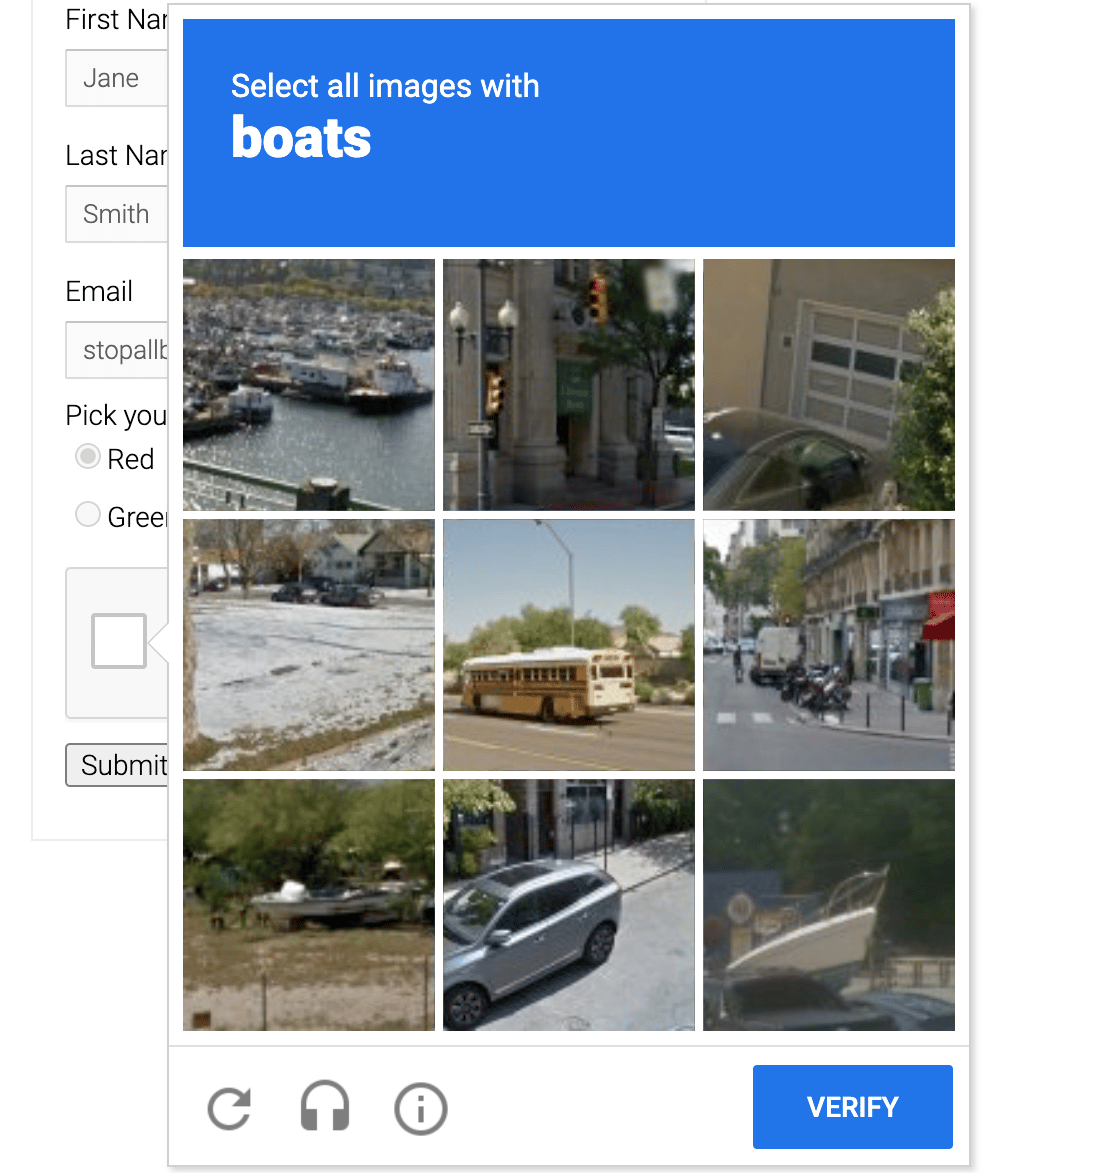 reCAPTCHA example